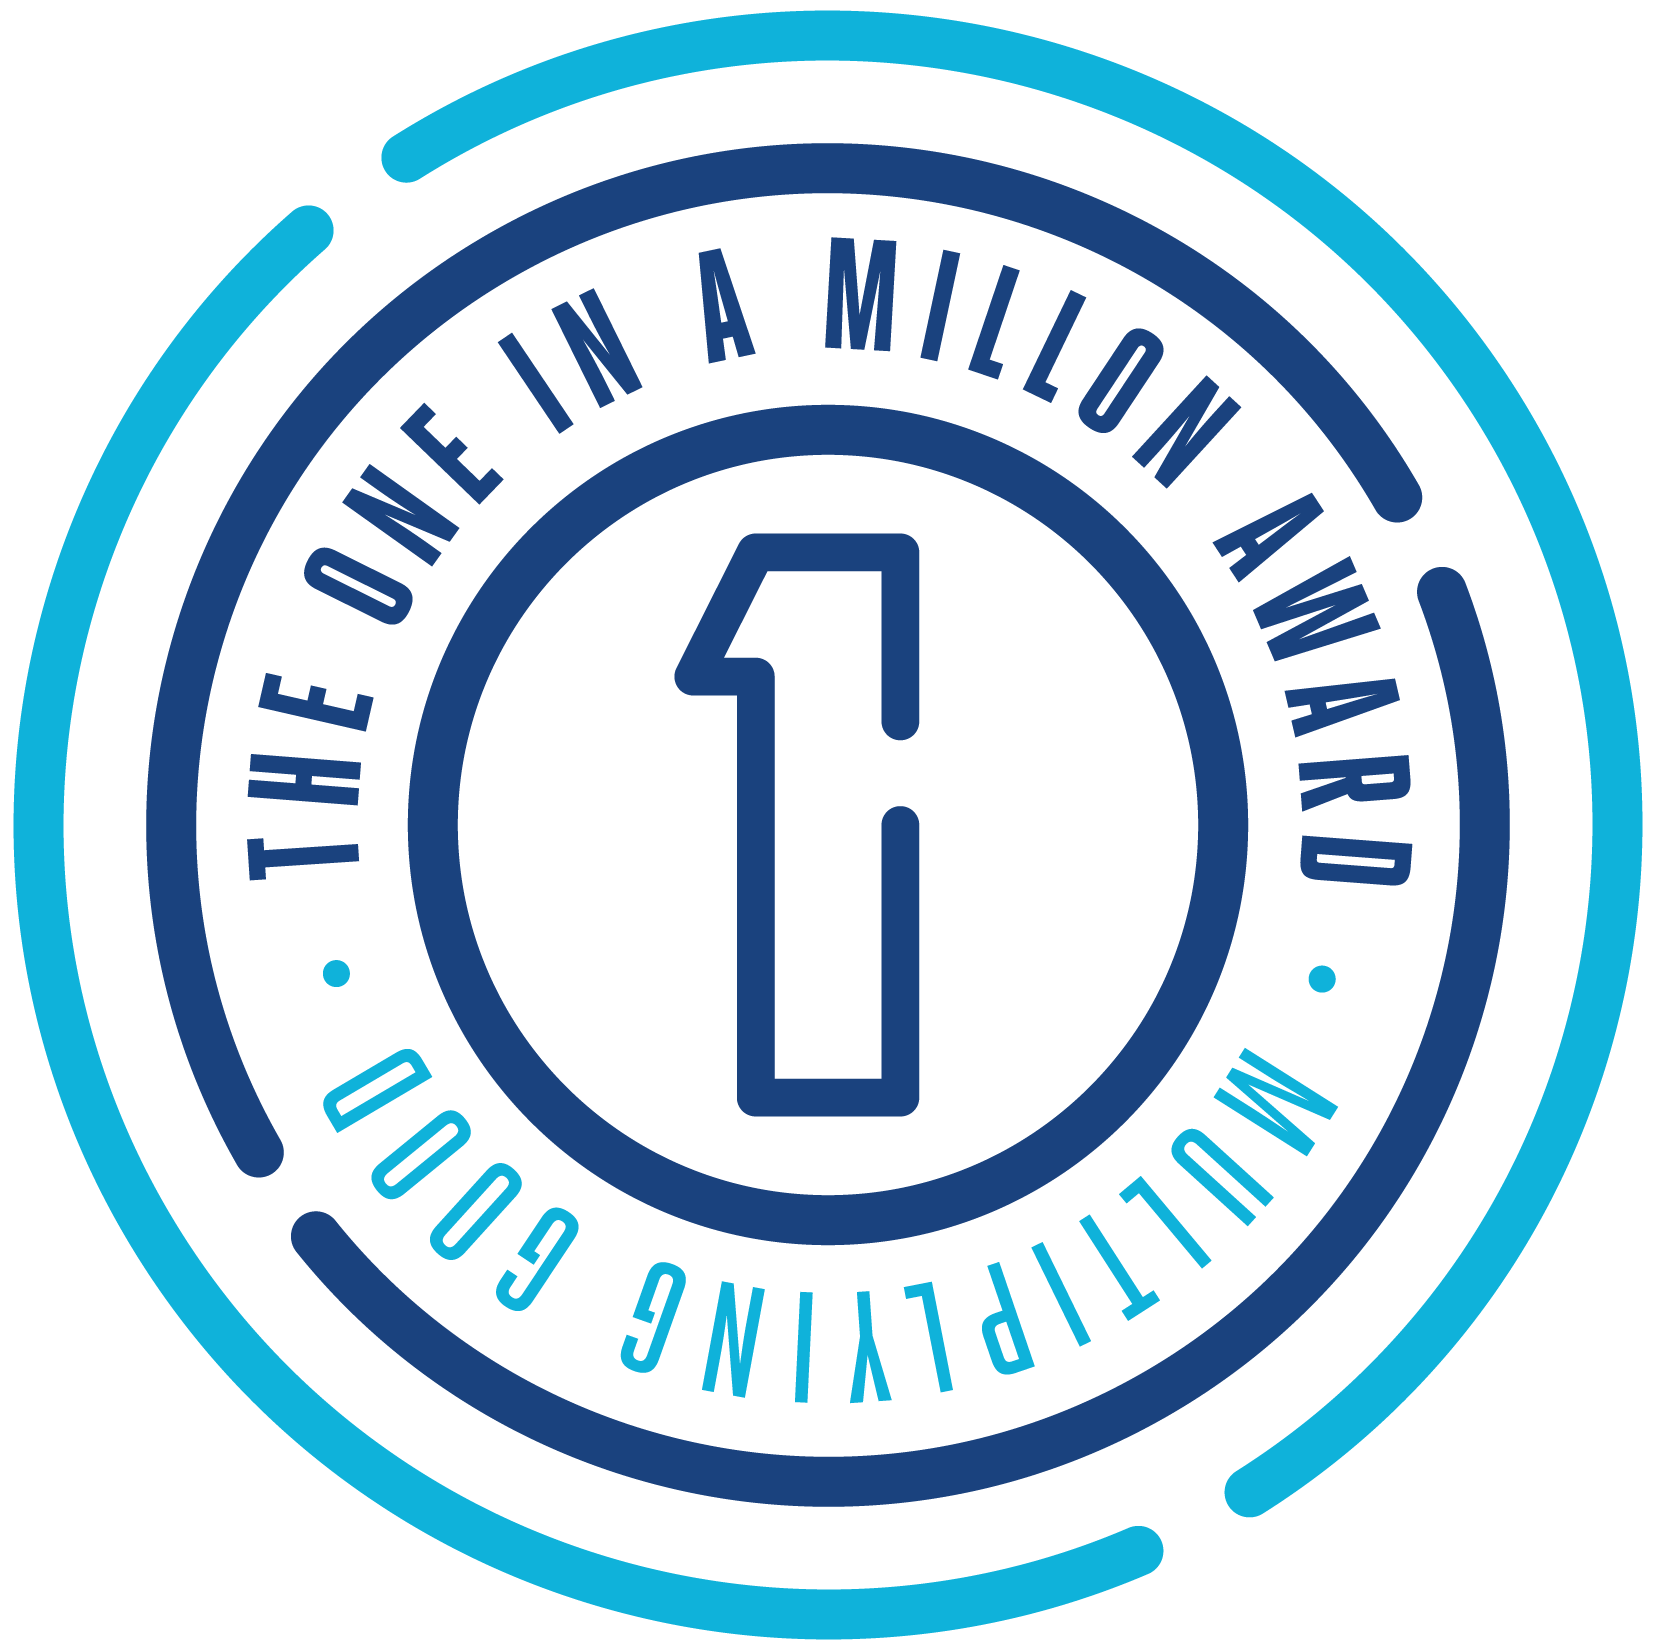 One in a Million Award
logo